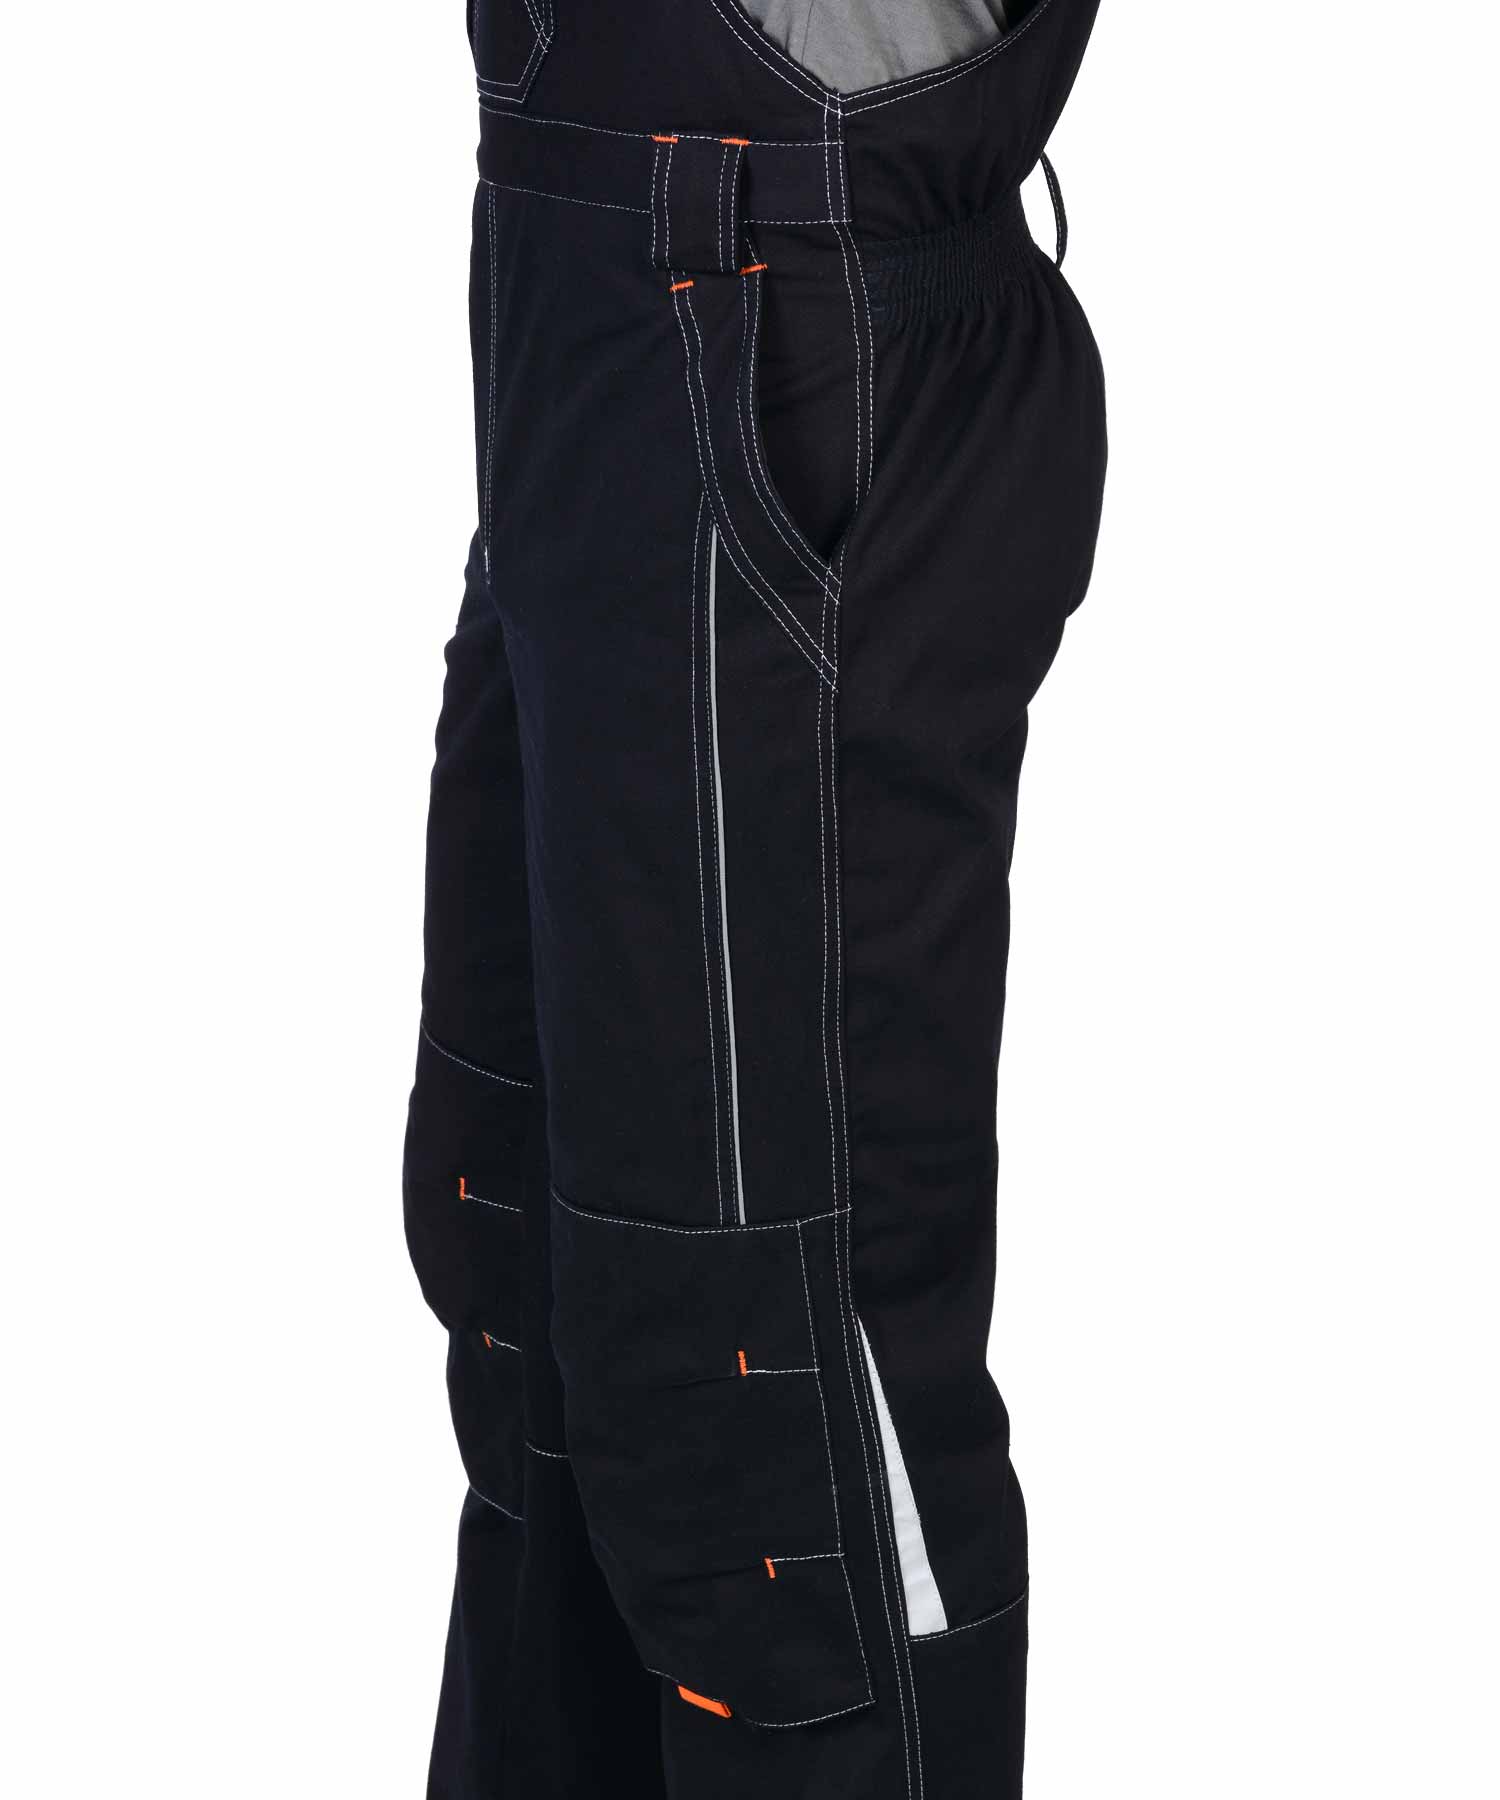 Костюм Джет, куртка, п/к т-синий с васильковым и оранж.отд. 100% х/б, пл. 320 г/м2